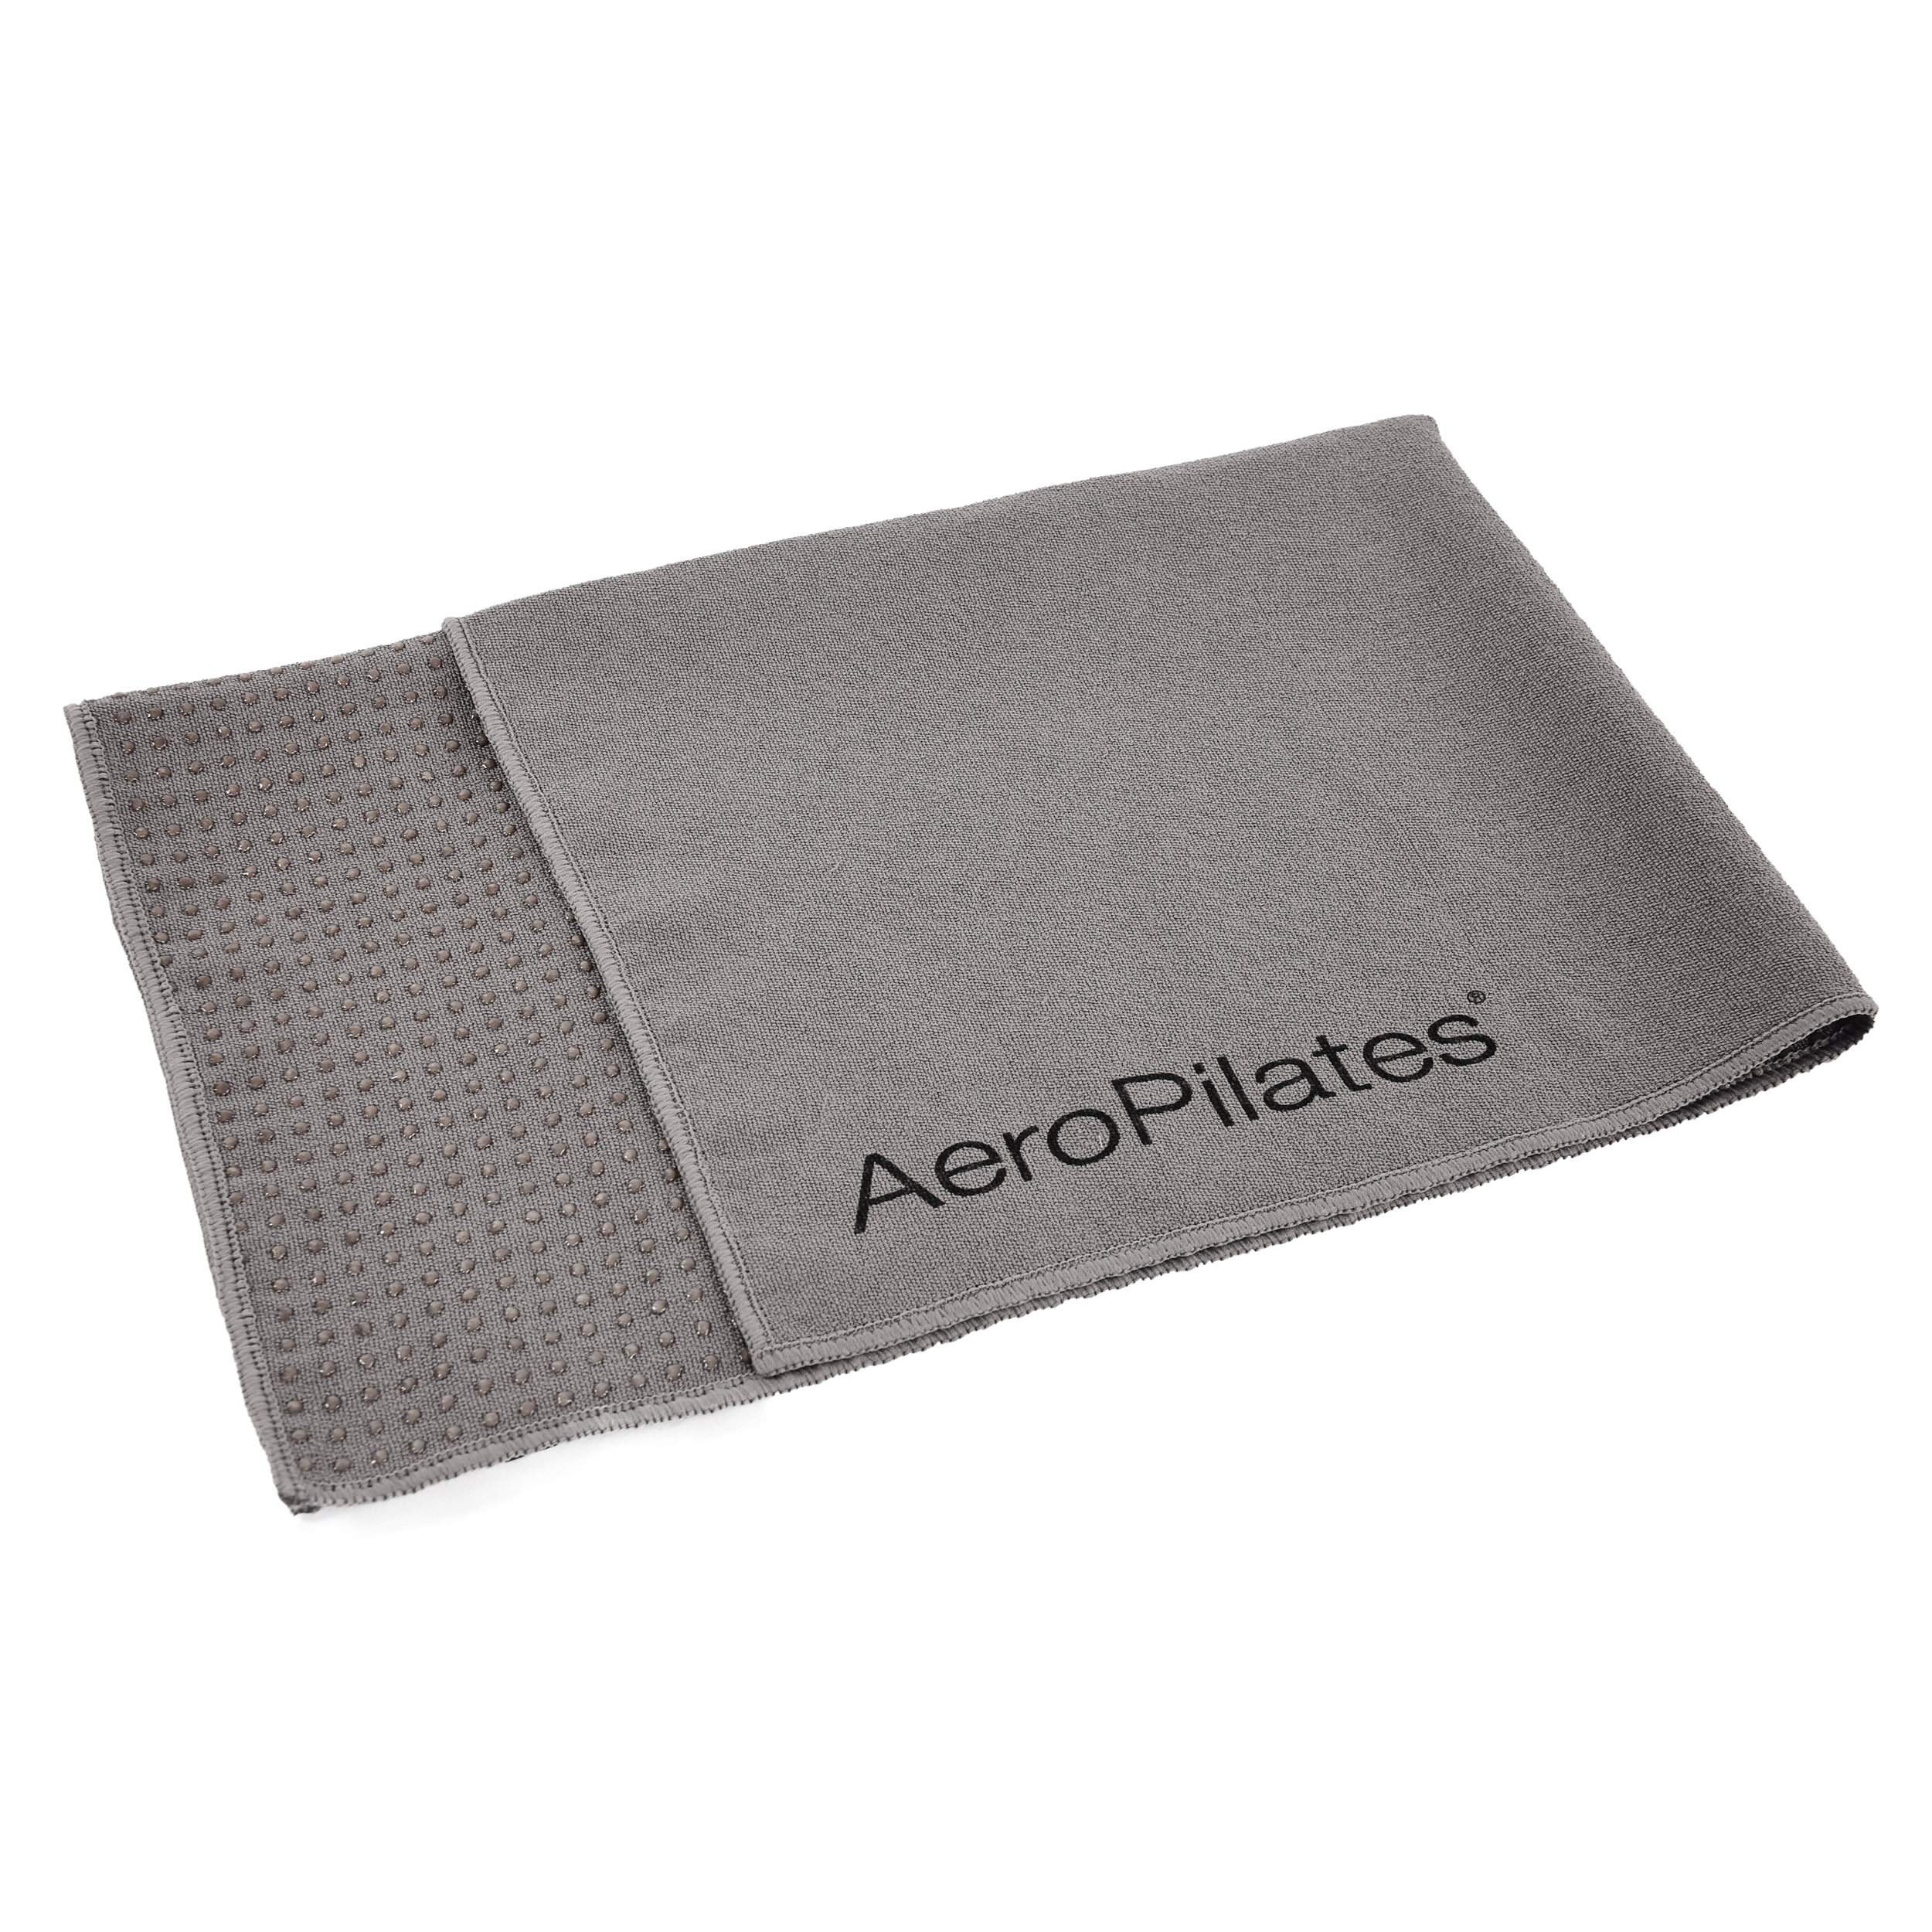 AeroPilates Towel Product Photo.